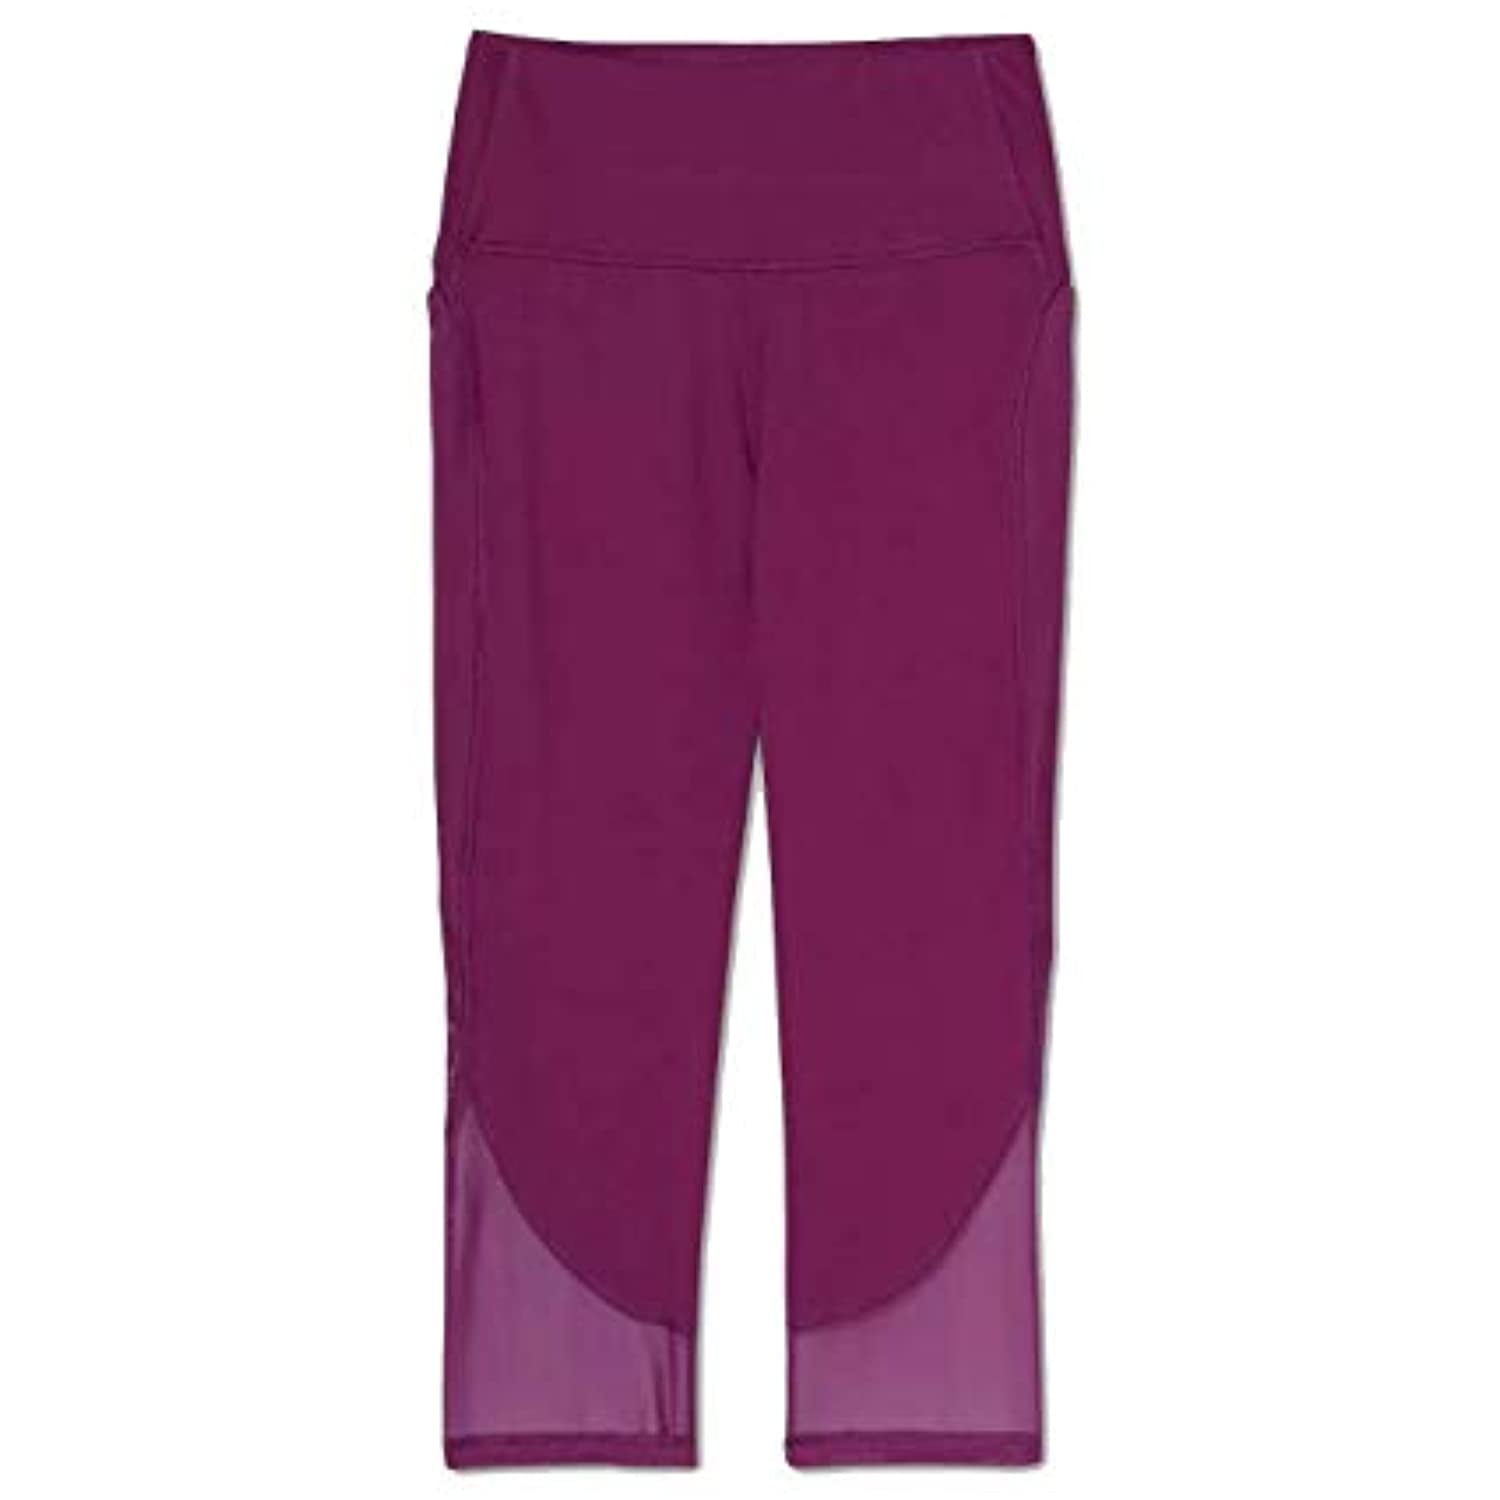 All in Motion Women's Contour Curvy High-Waisted Capri Leggings 21 -  (Purple, Small)